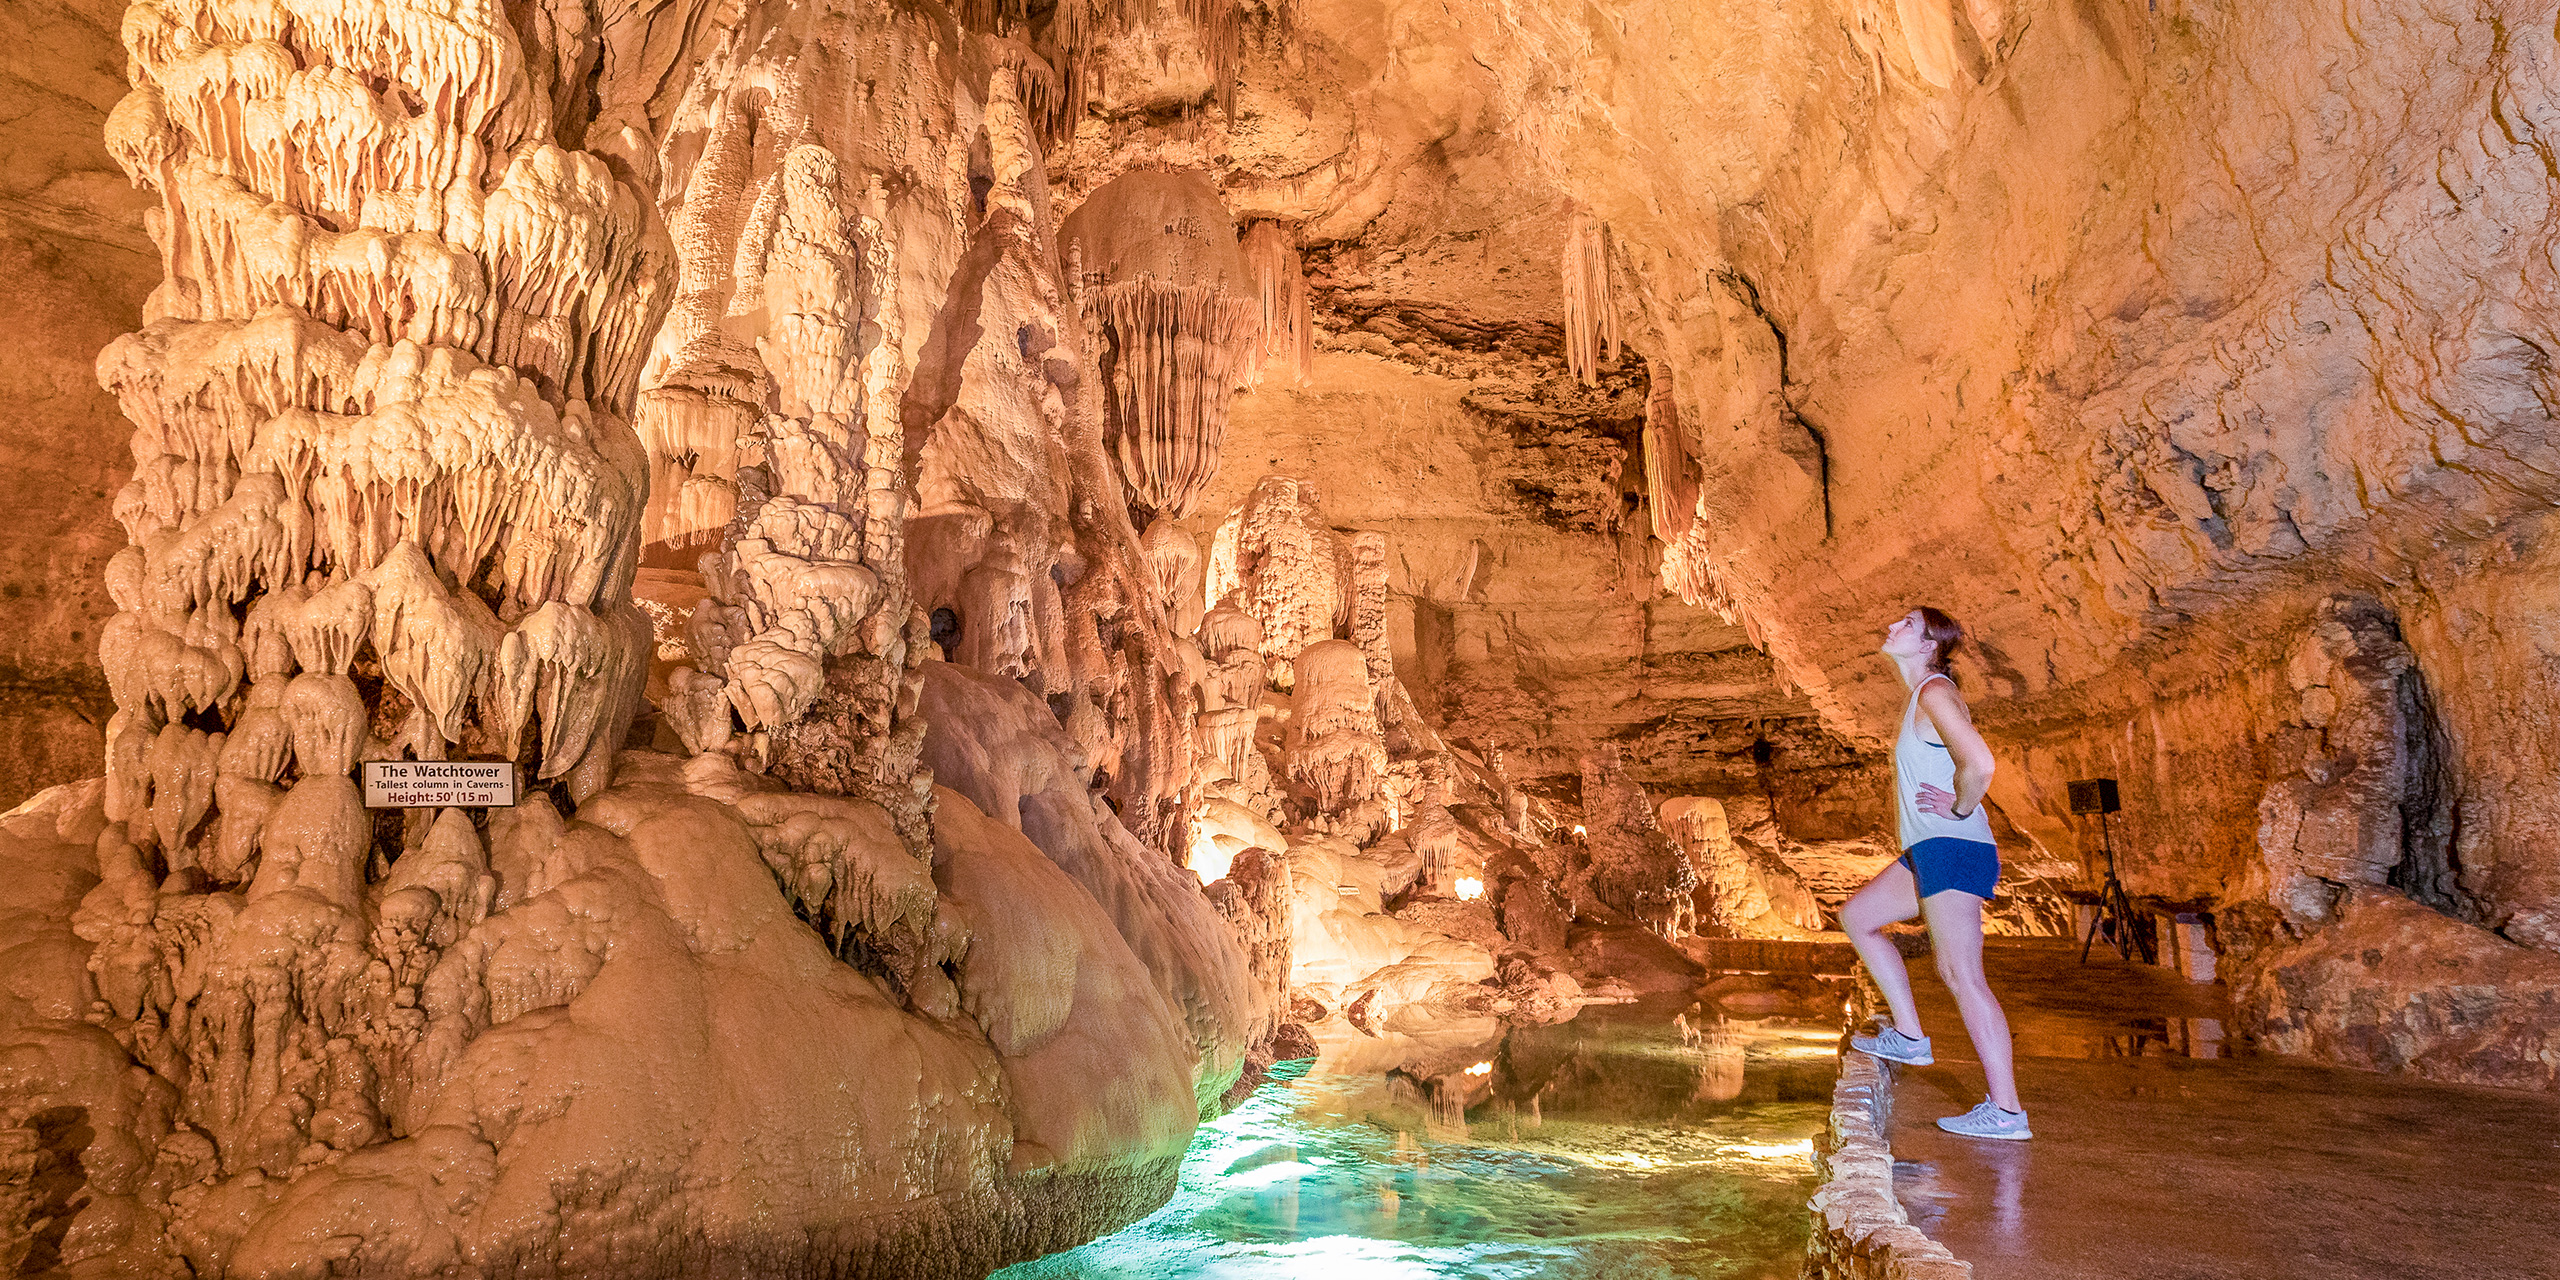 Natural Bridge caverns in; Courtesy of Travel Texas